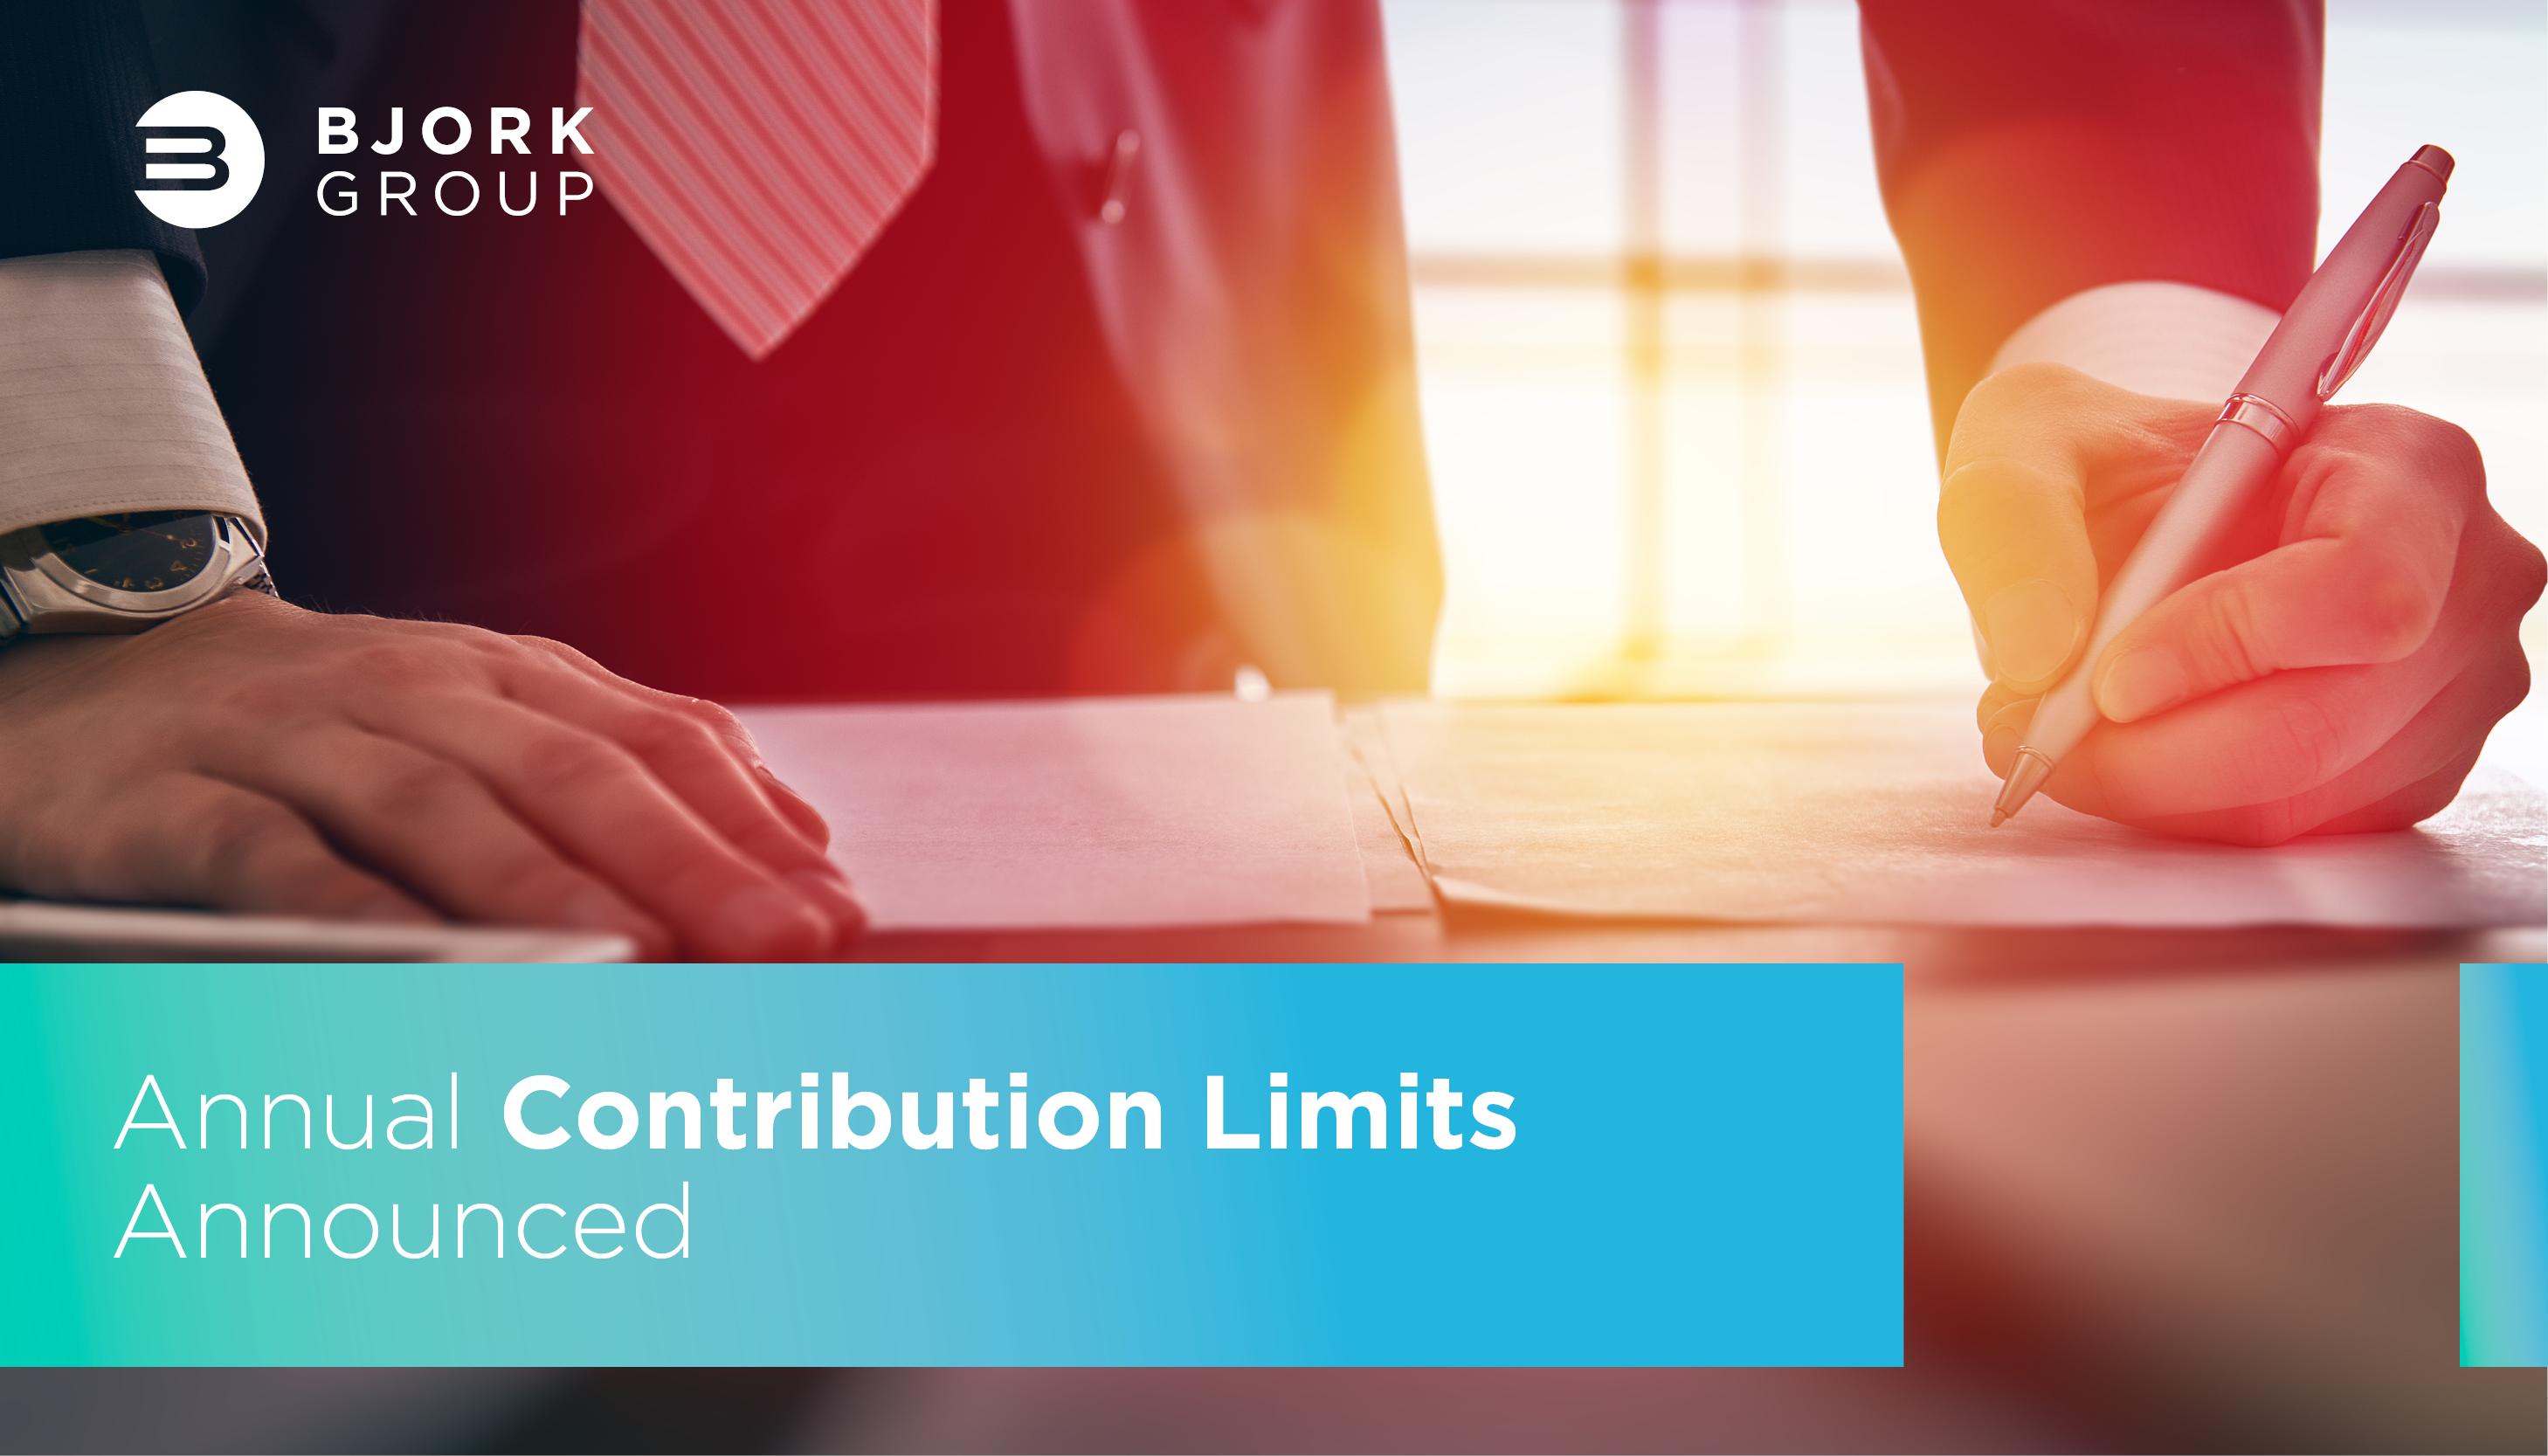 BJORK_Annual Contribution Limits_Headline Image